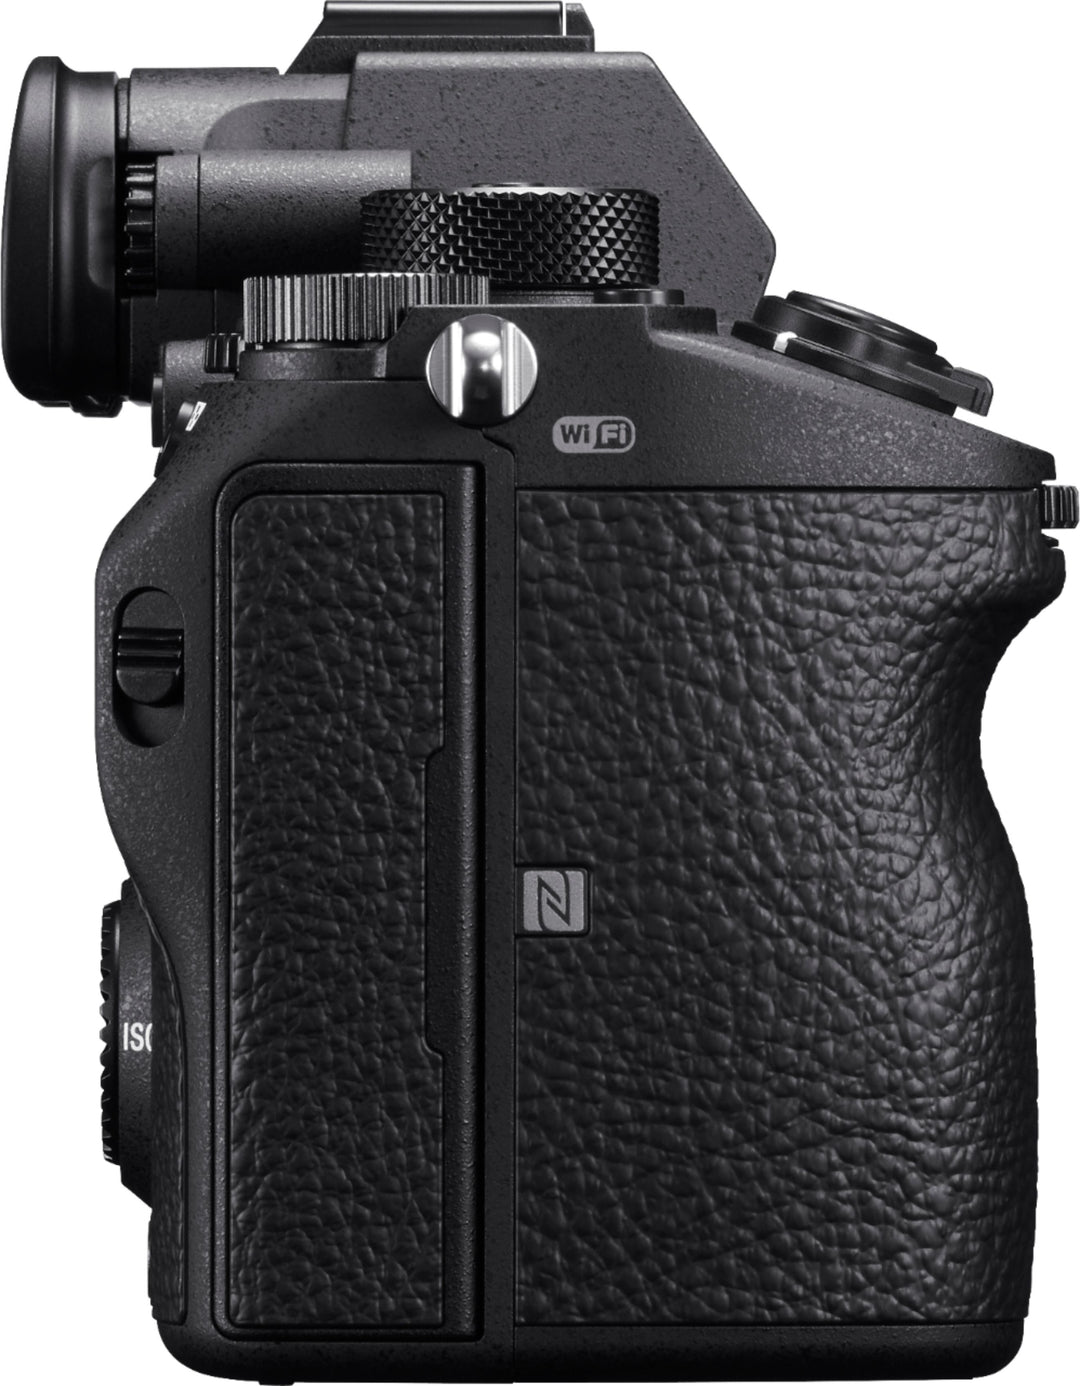 Sony - Alpha 7R III Full-frame Interchangeable Lens 42.4 MP Mirrorless Camera - Body Only - Black_2